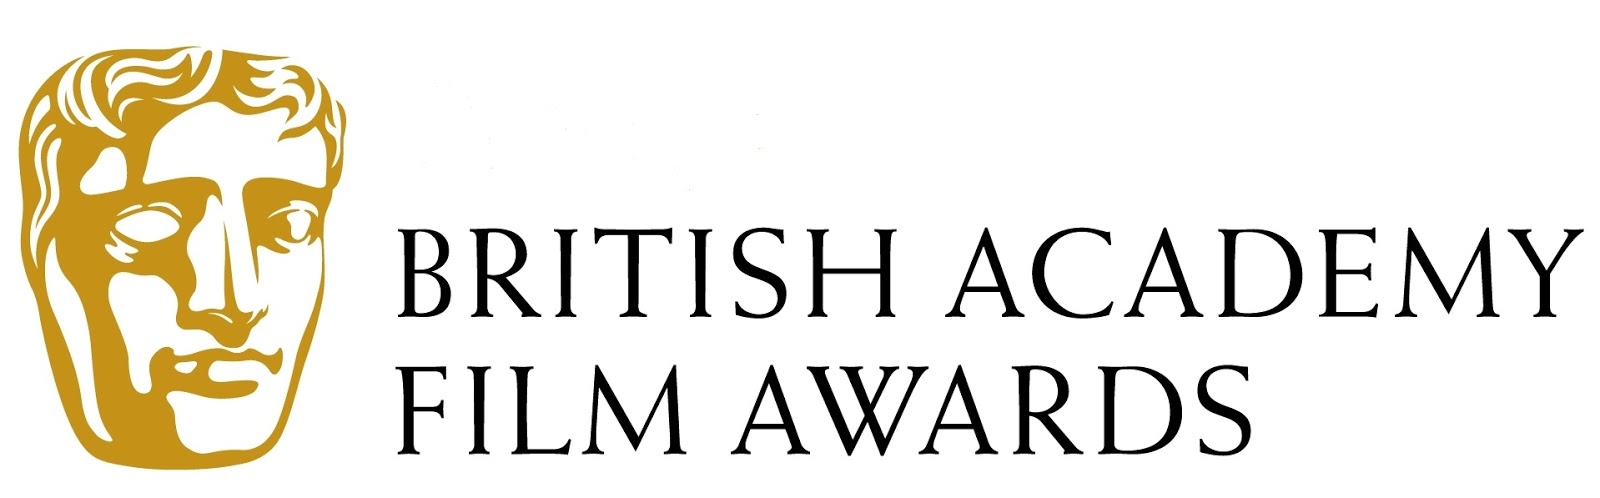 british-academy-film-awards-logo-01-1600x498.jpg